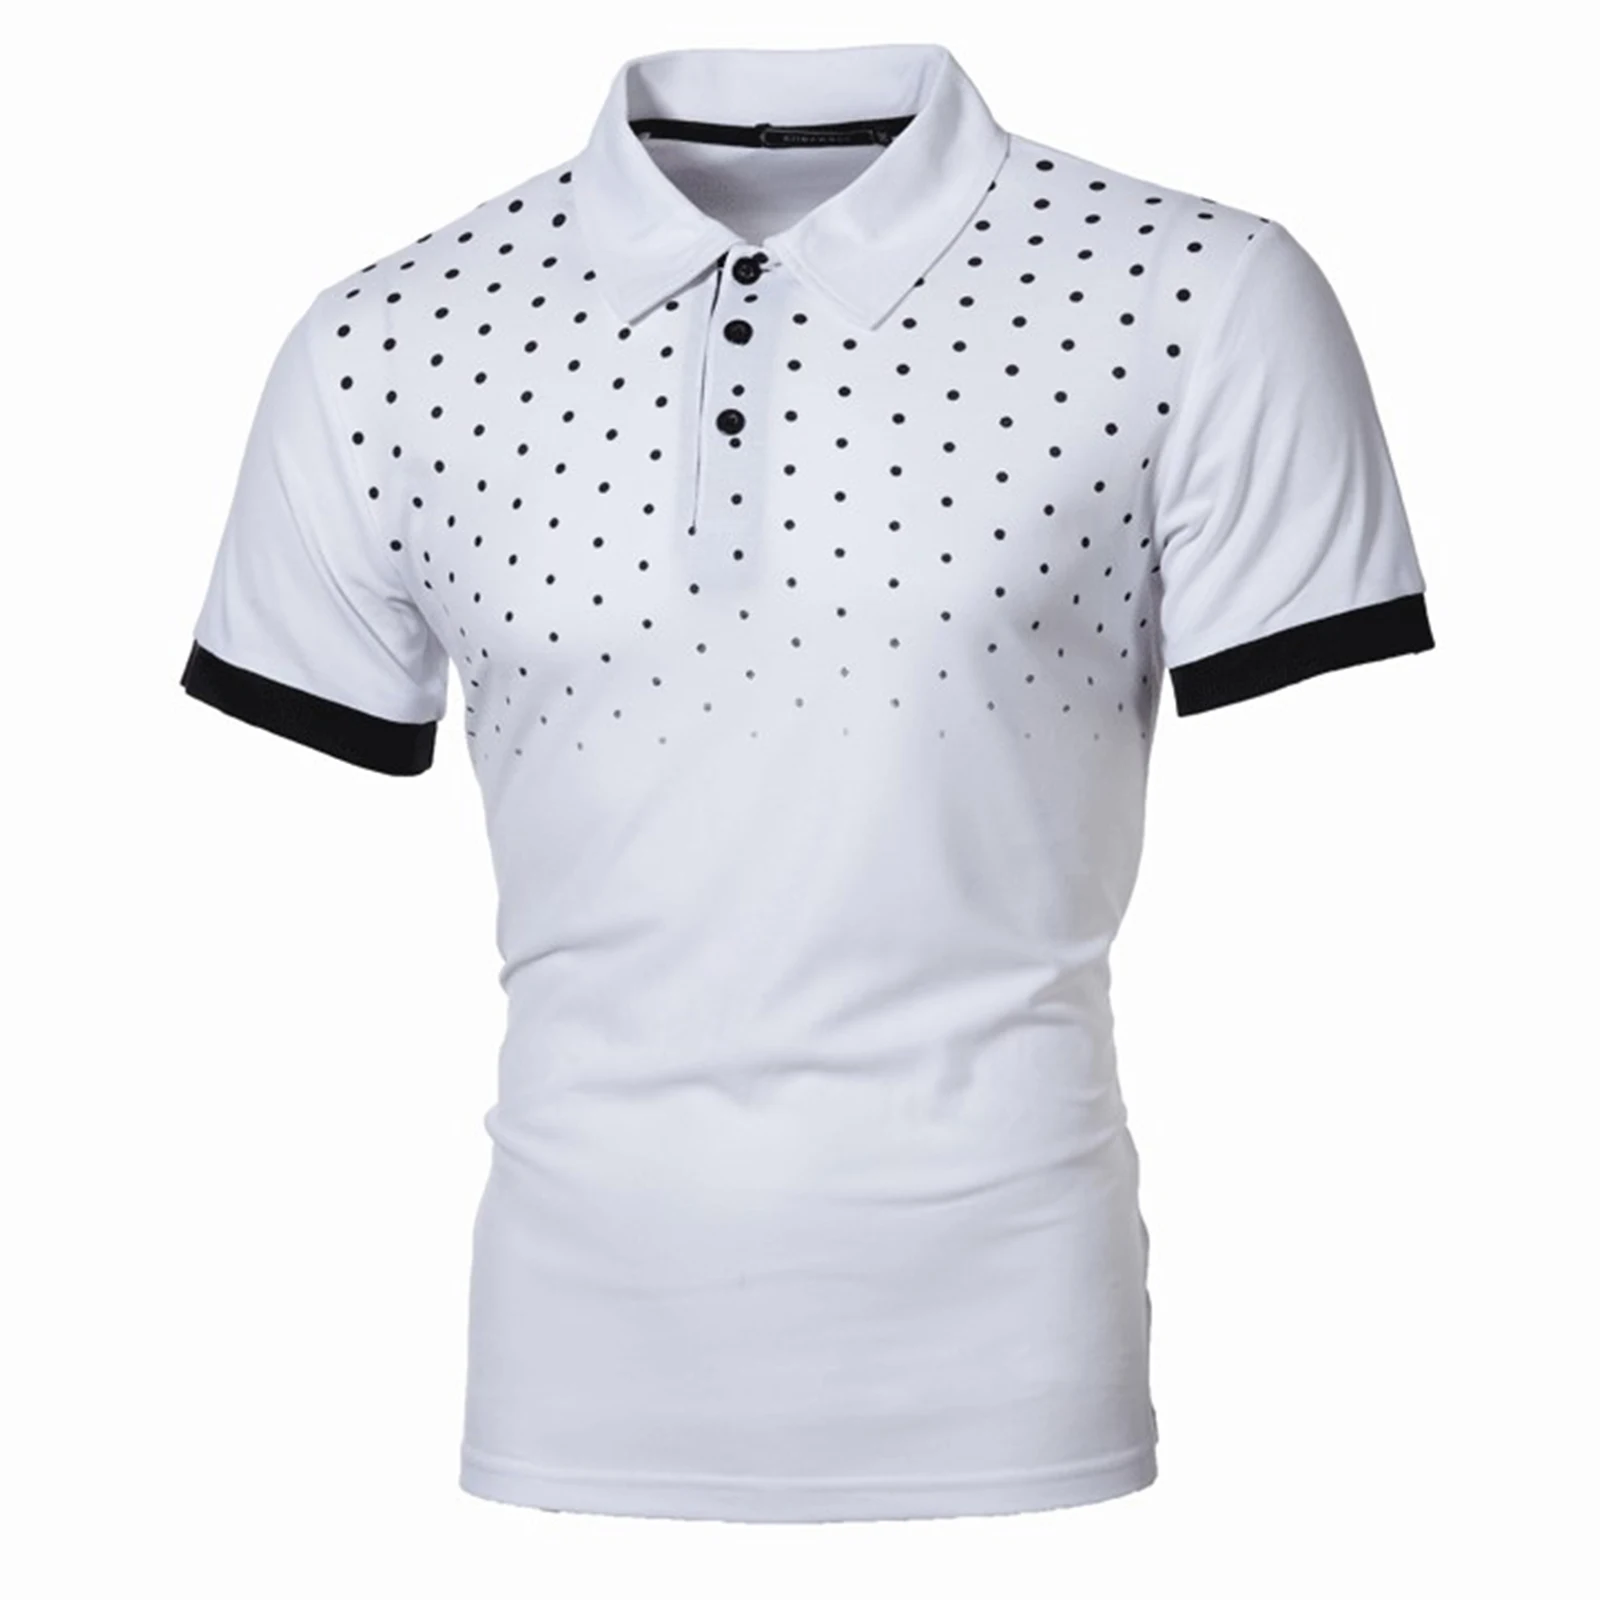 

Men Business Formal T-shirt Lapel Collar Short Sleeve Buttons Closure Polka Dots Print Golf T-shirts Fashion Casual T-shirt Top